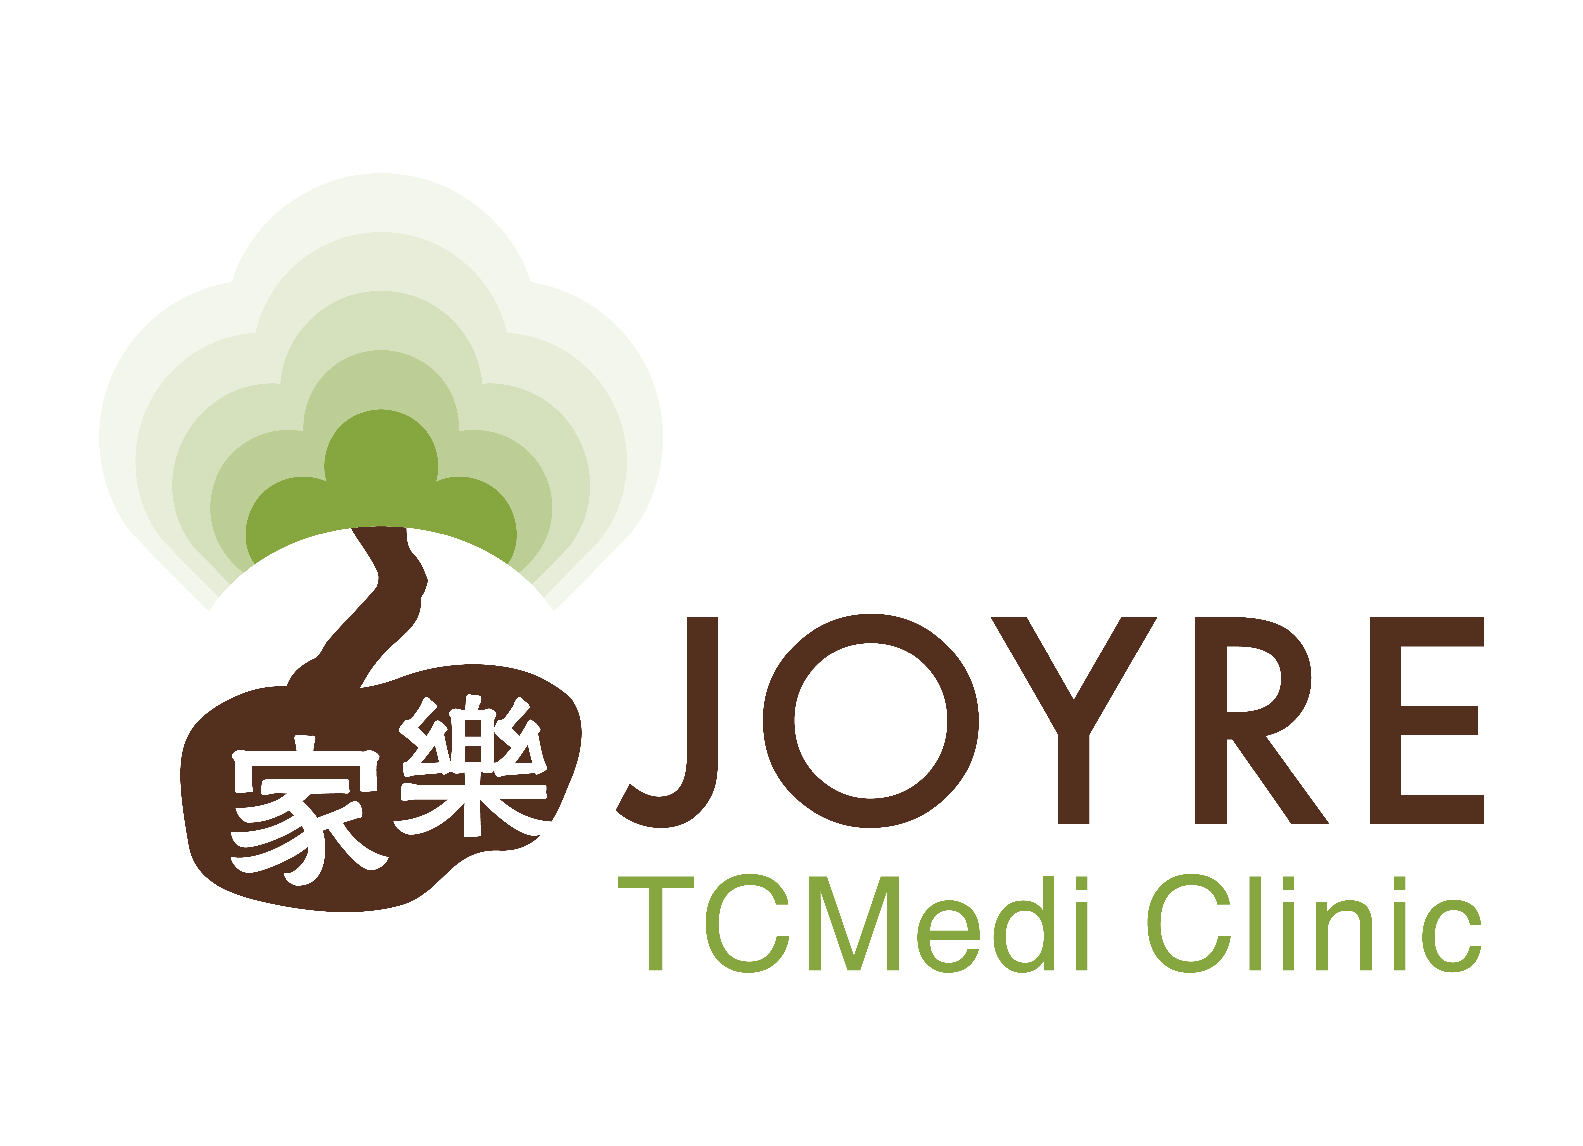 Joyre TCMedi Clinic 